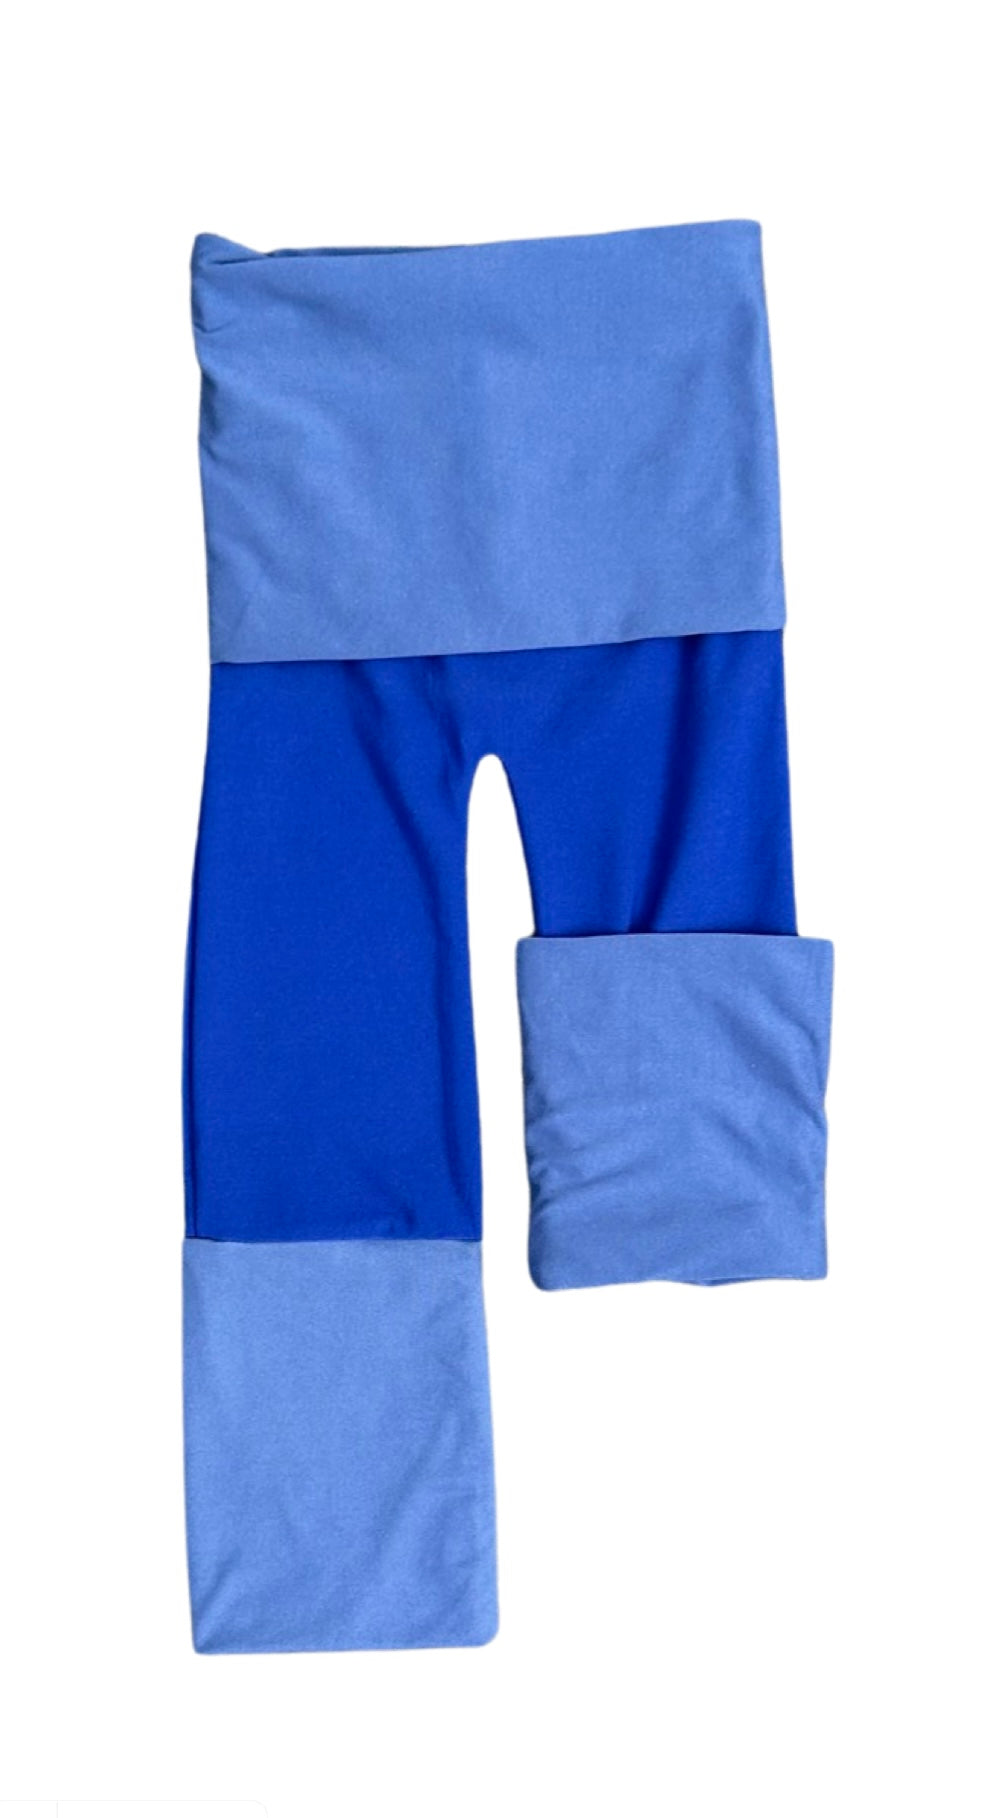 Adjustable Pants - Dark Blue with Light Blue